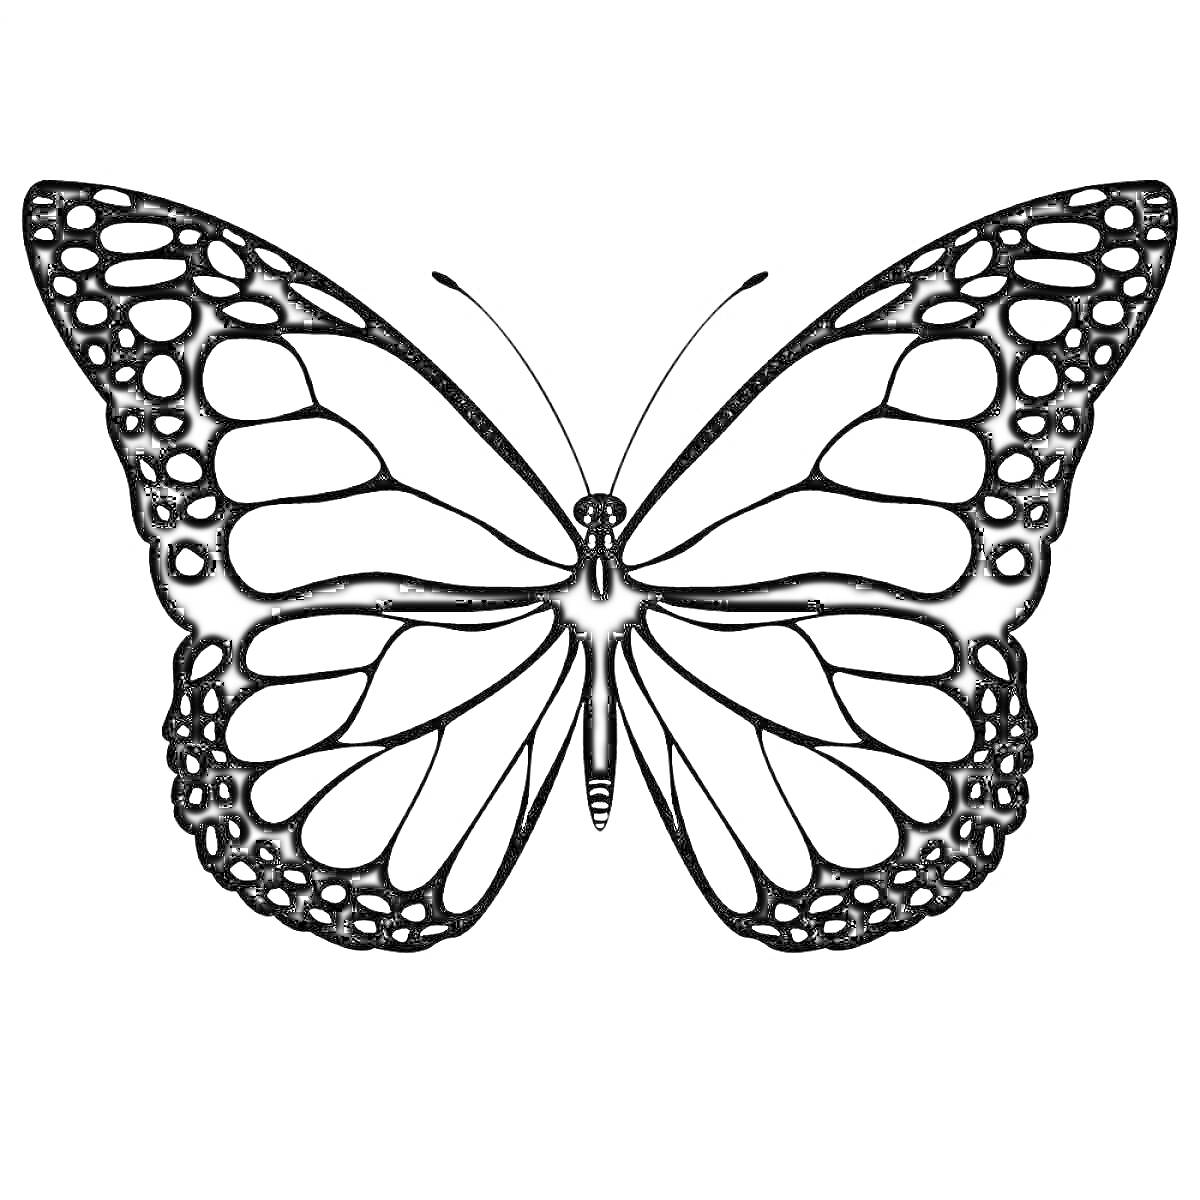 Раскраска Шаблон бабочка с симметричными узорами на крыльях